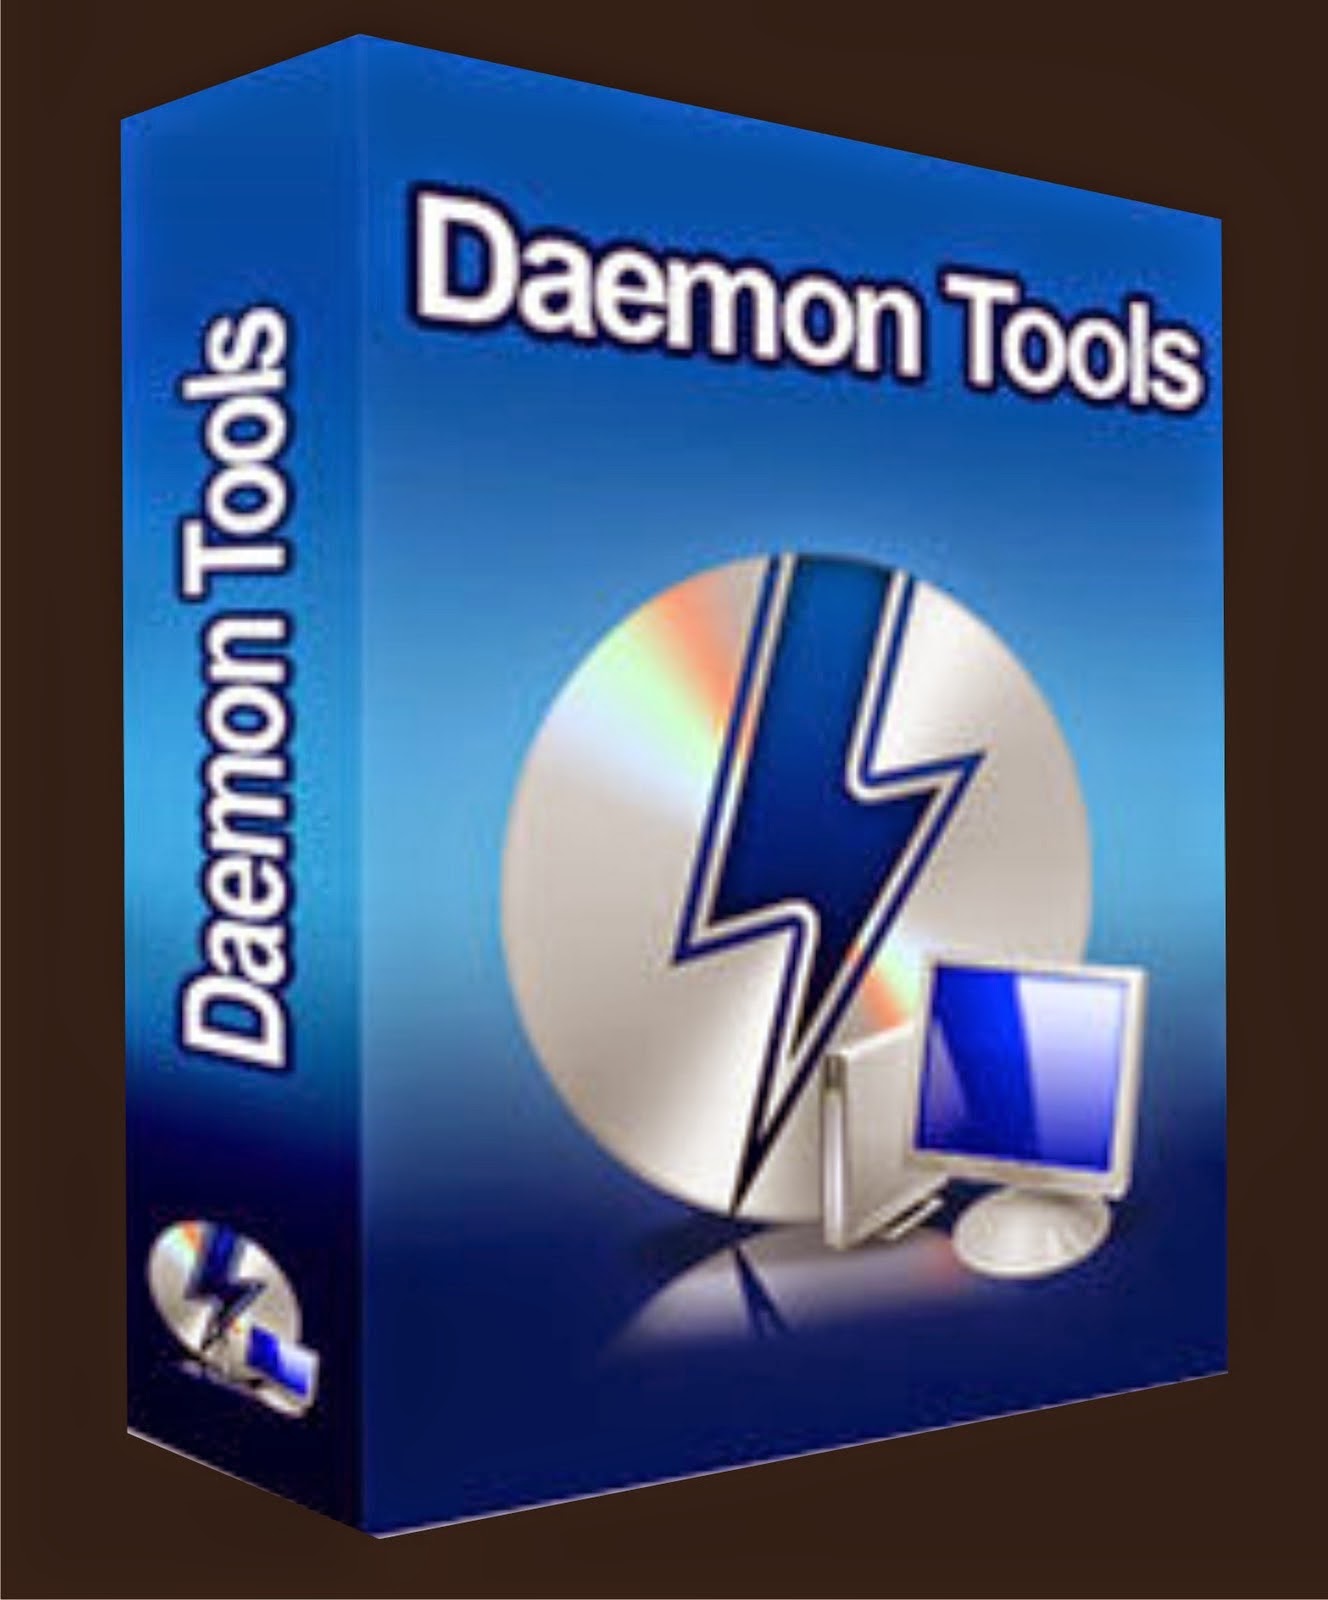 download daemon tools free windows 8